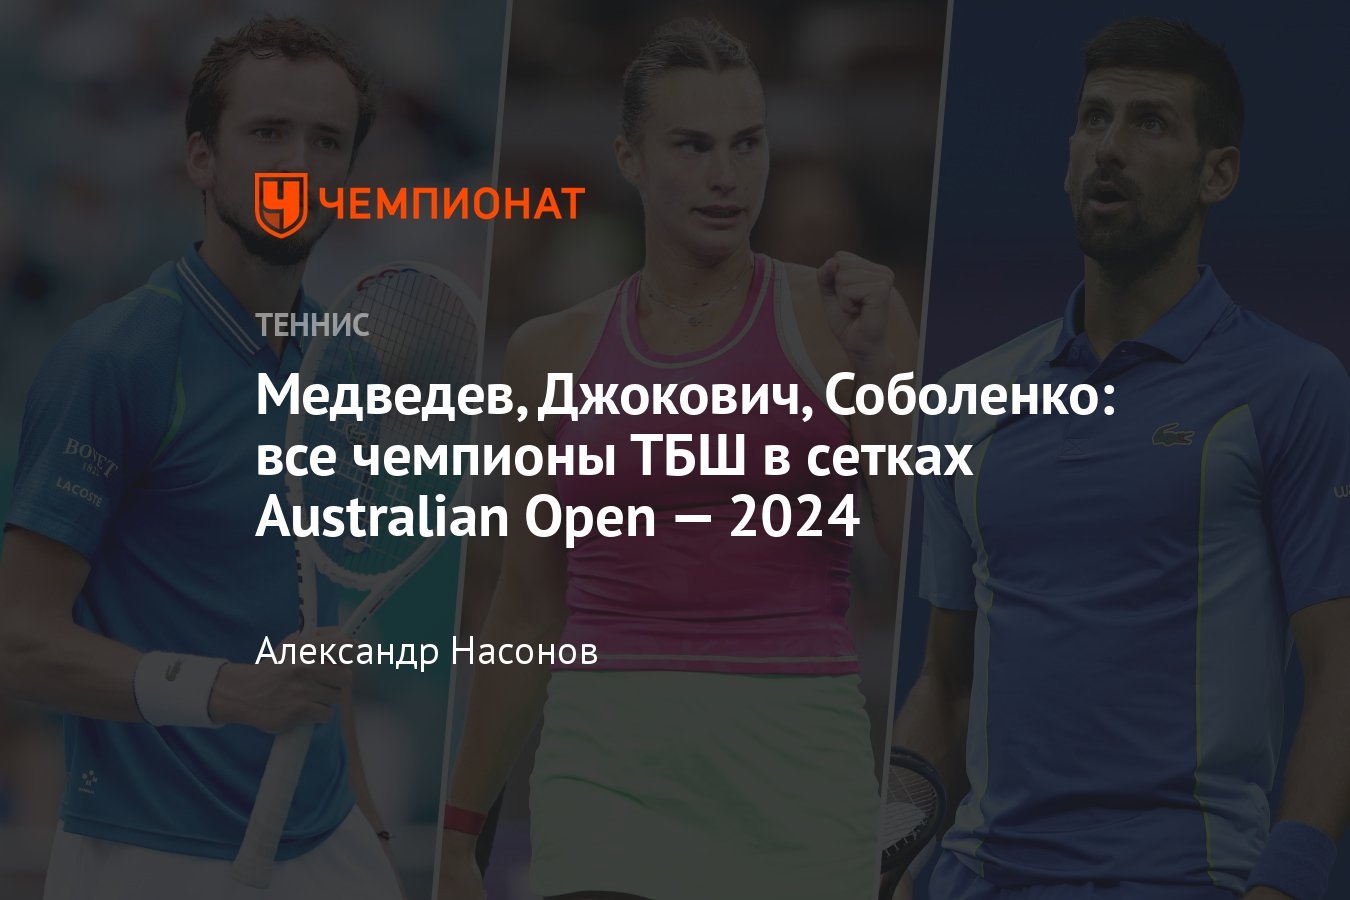 Medvedev, Djokovic, Sabalenka all TBS champions in Australian Open